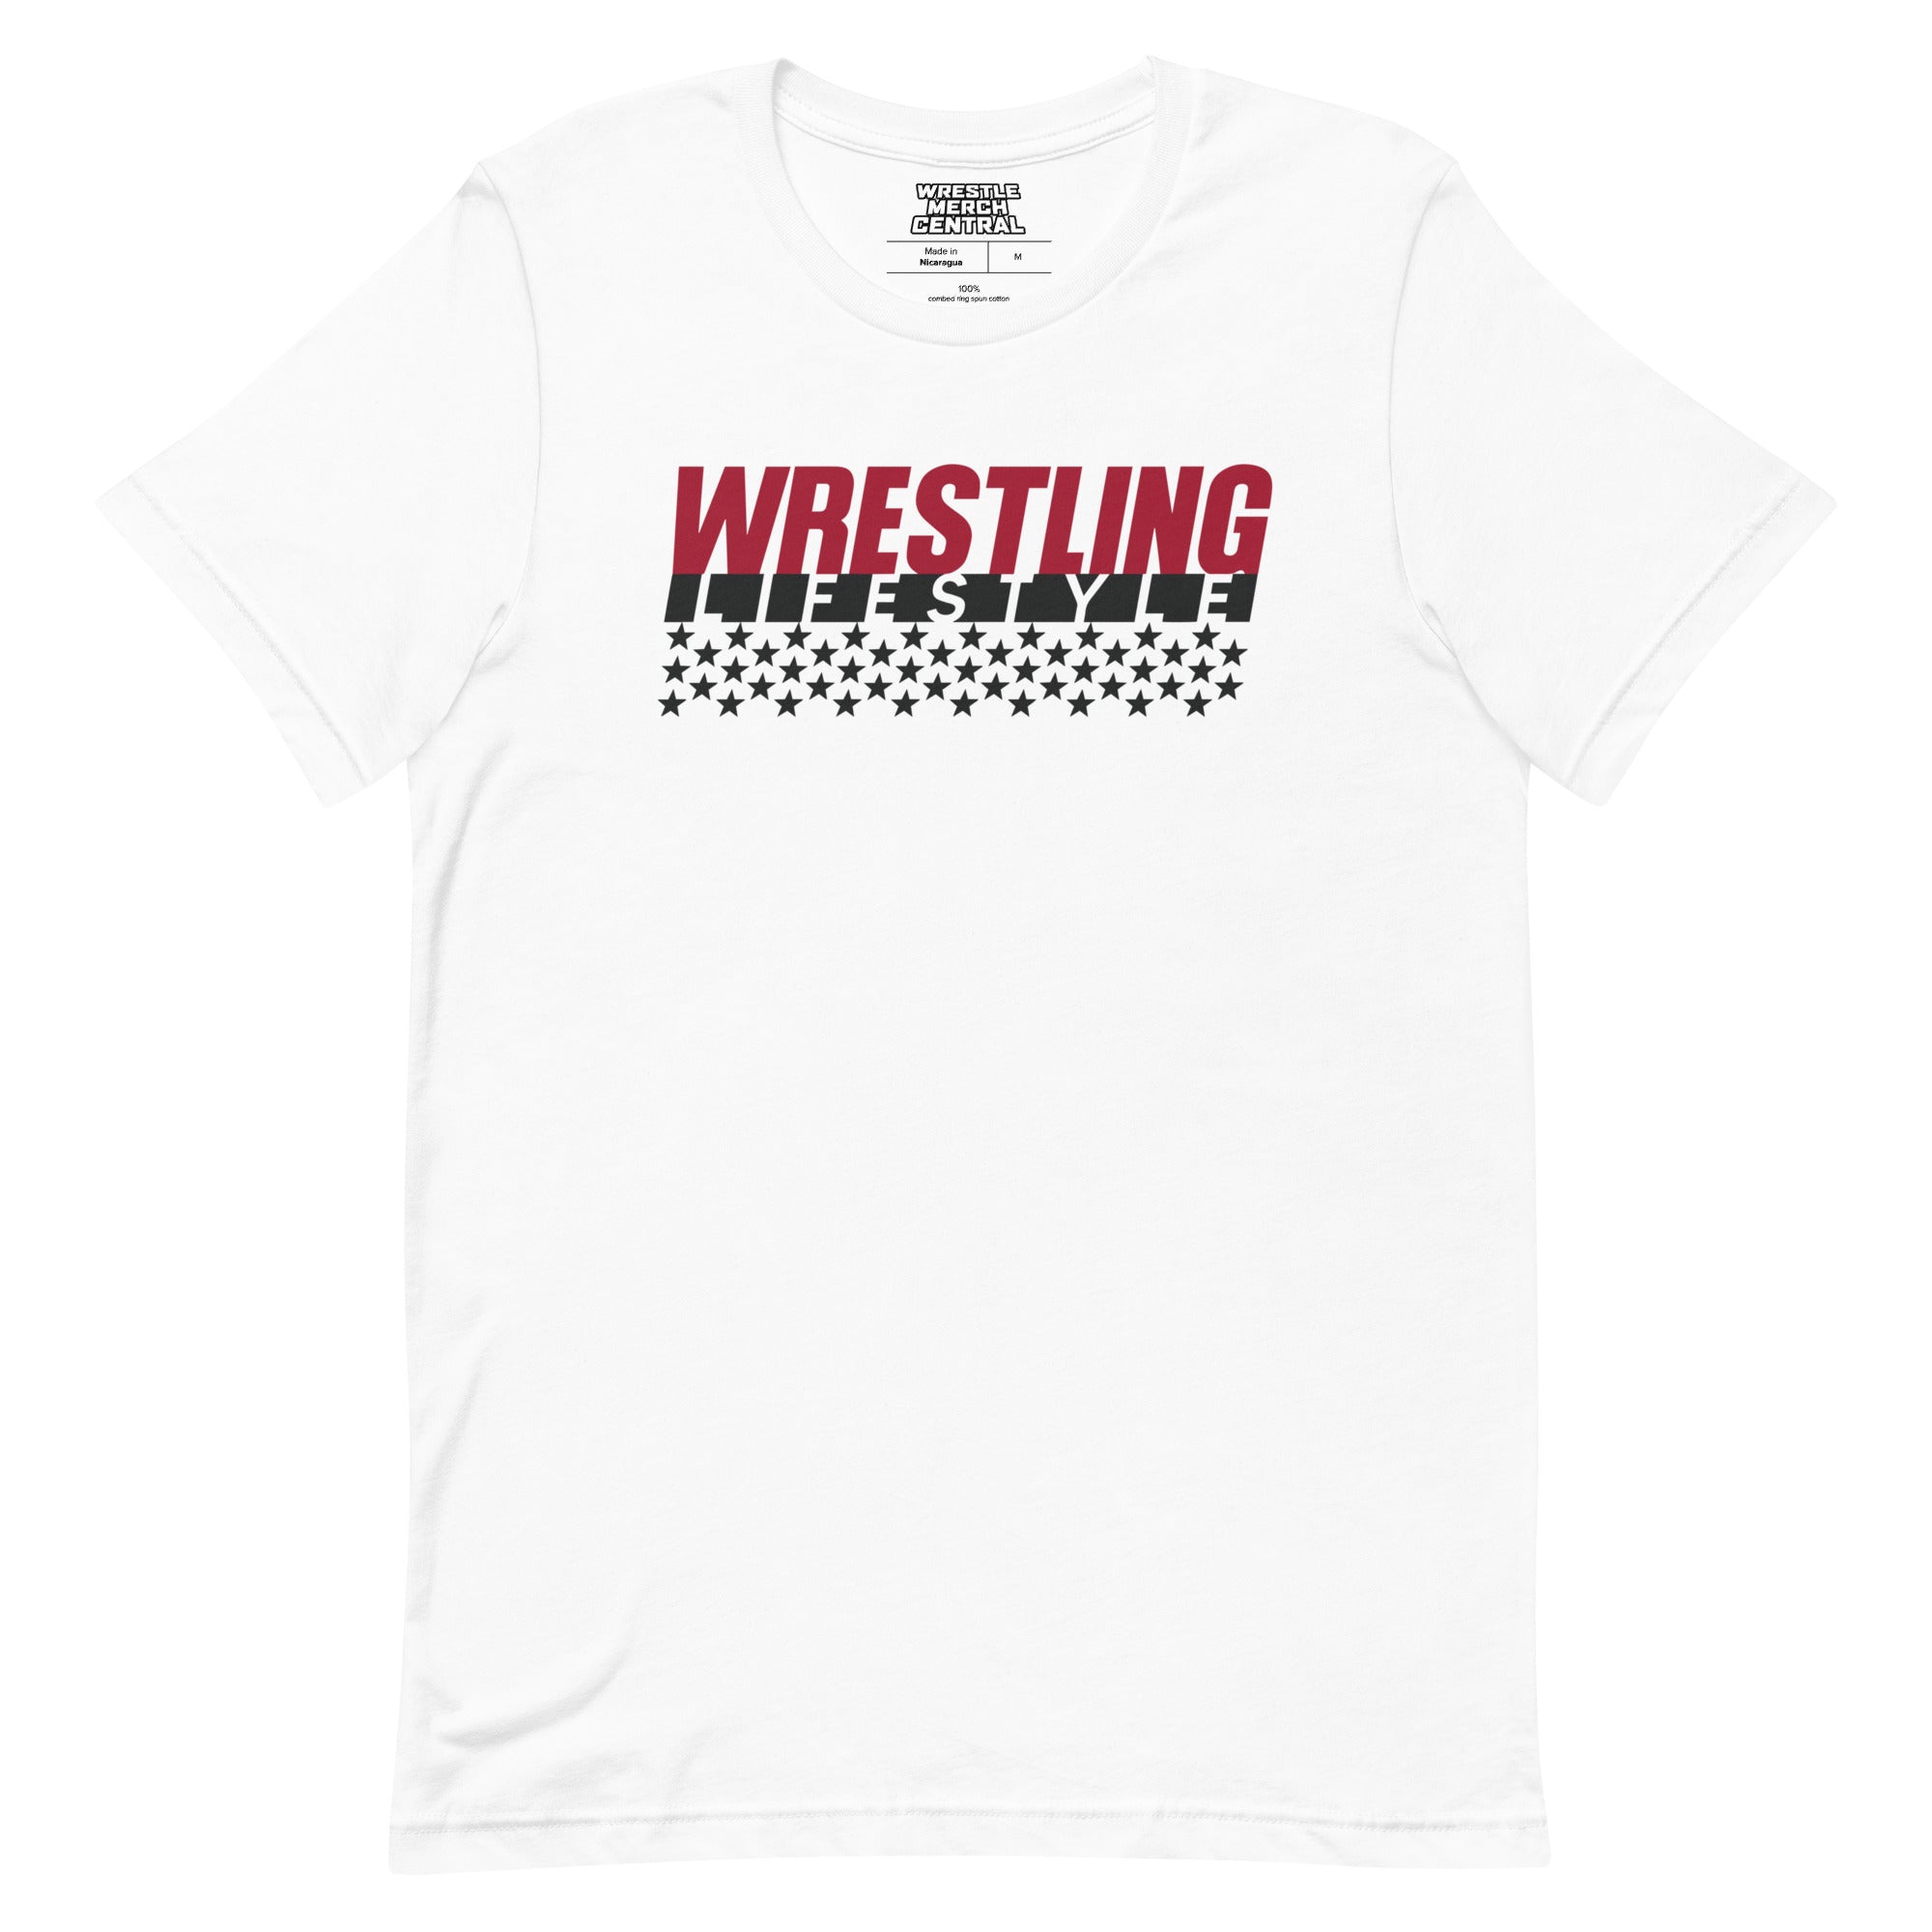 Let's Wrestle Wrestling Lifestyle Unisex T-Shirt